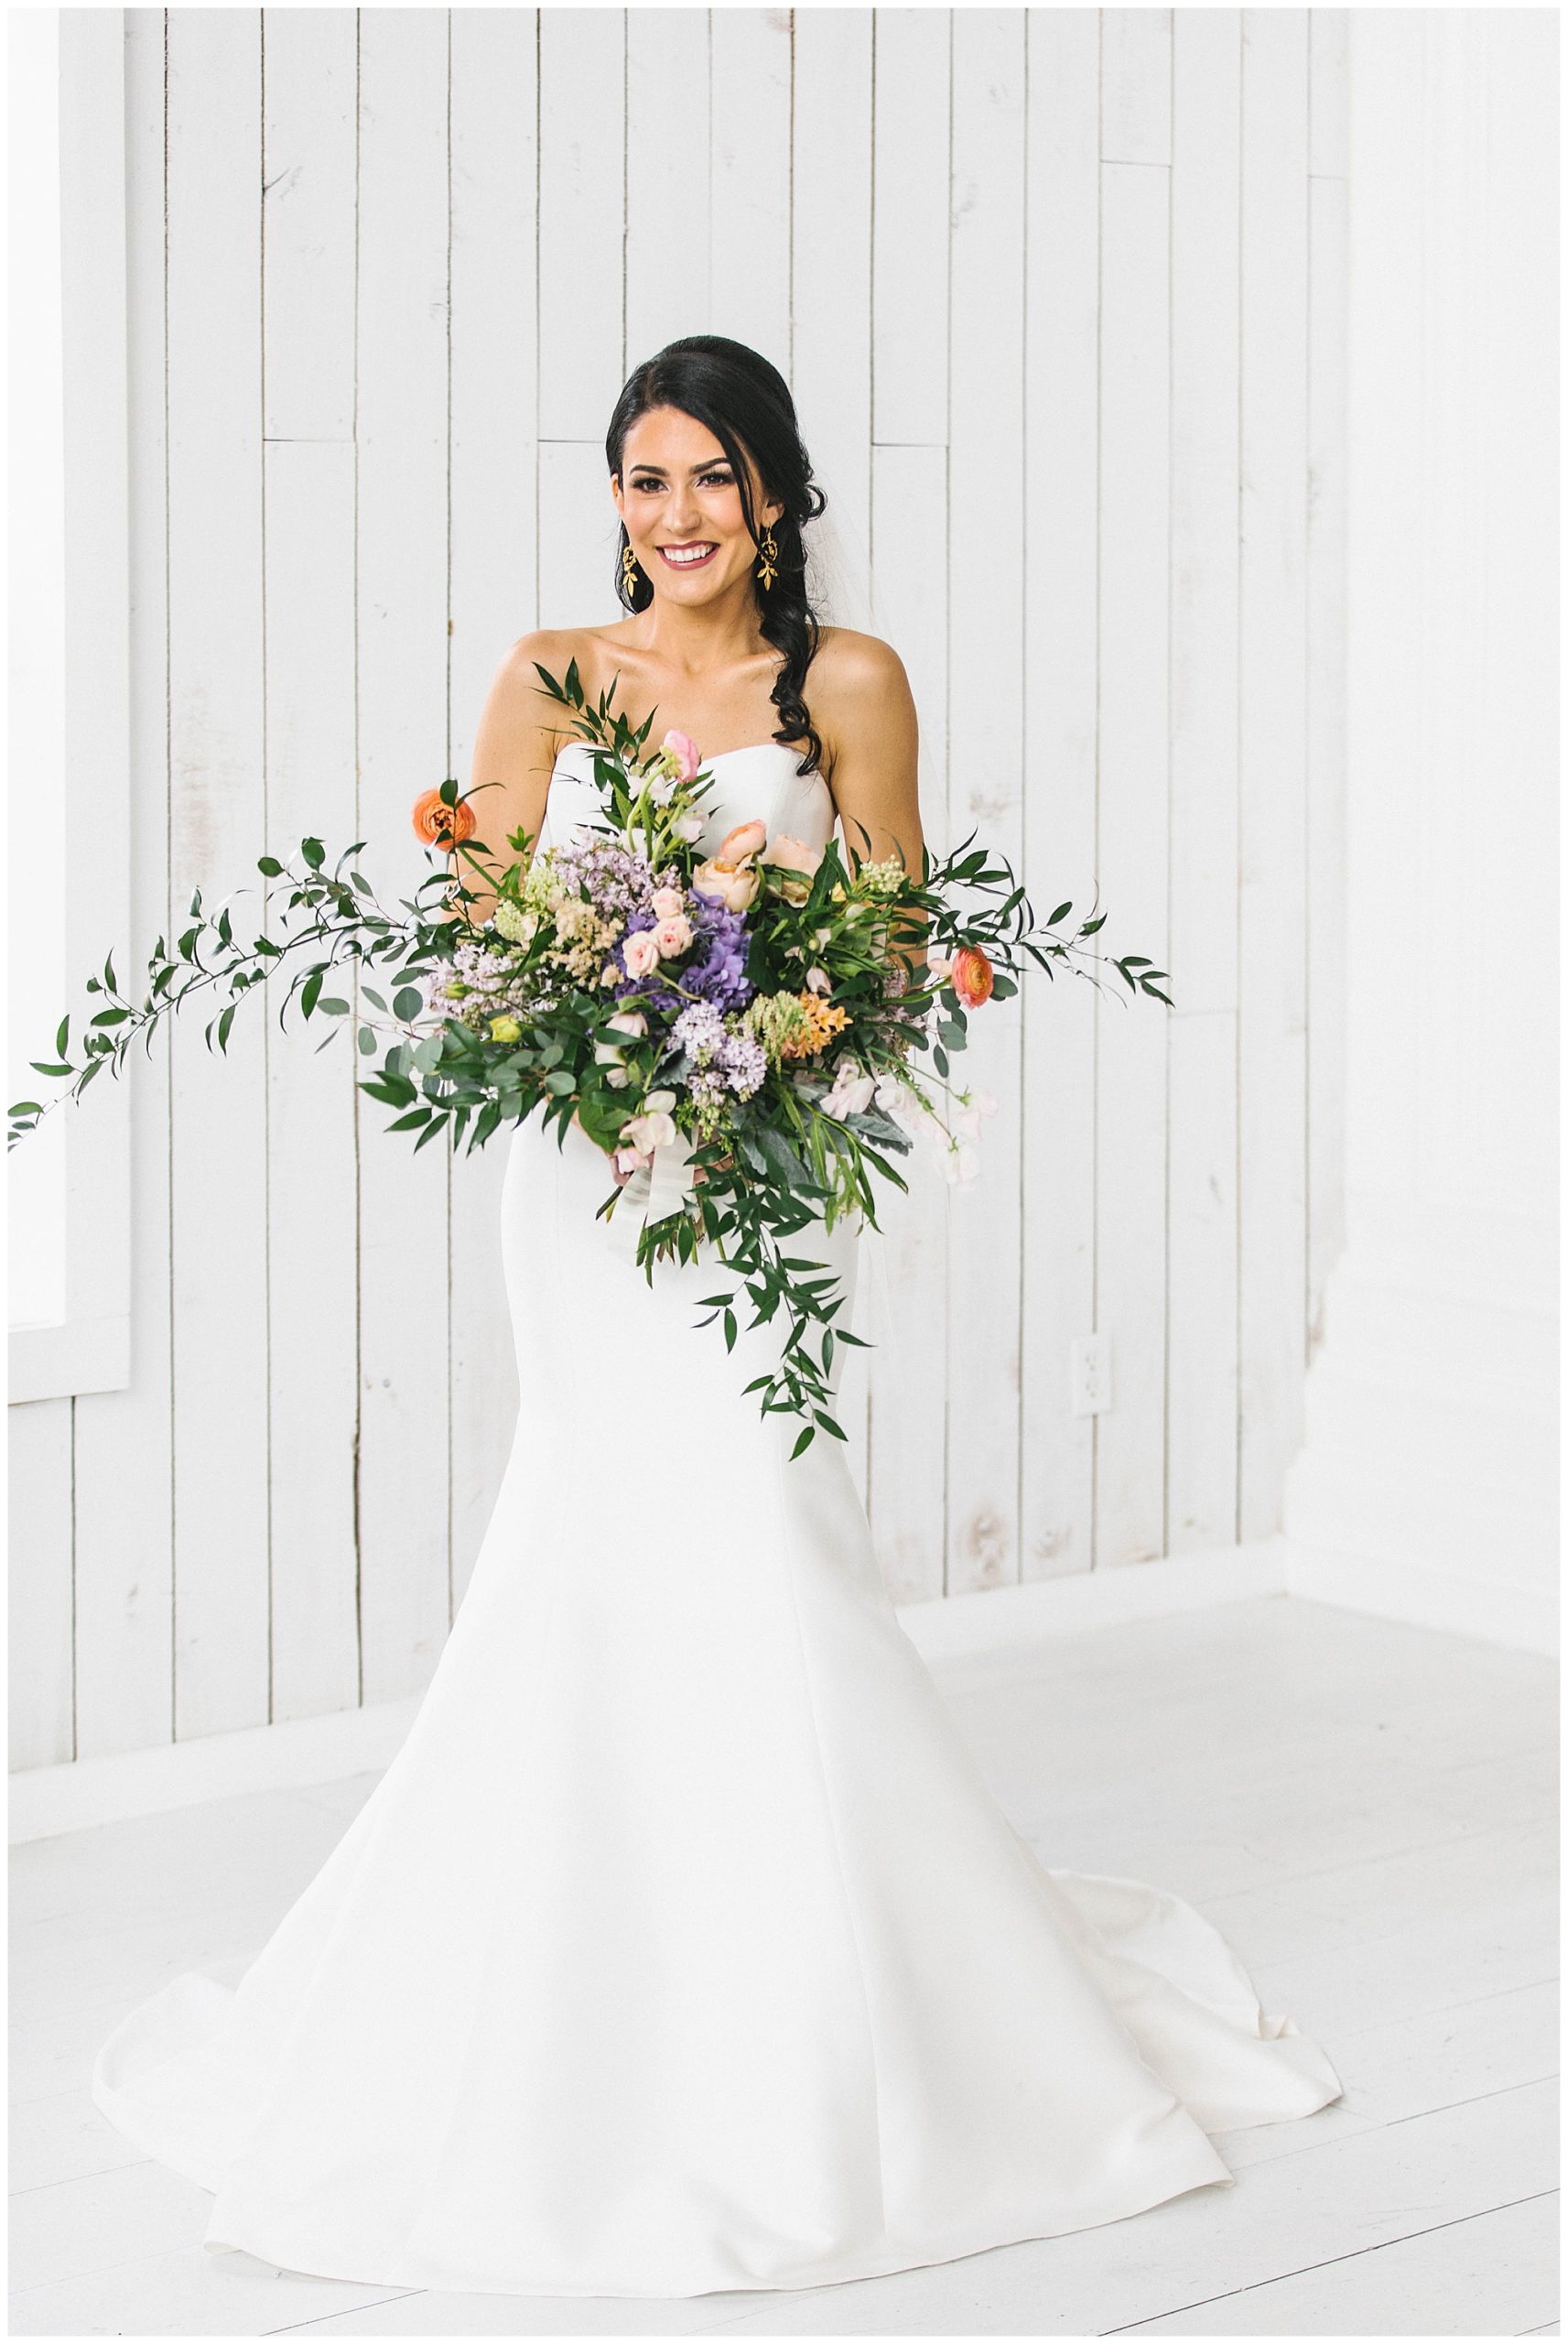 Dark-haired bride holding a lavish wedding floral.